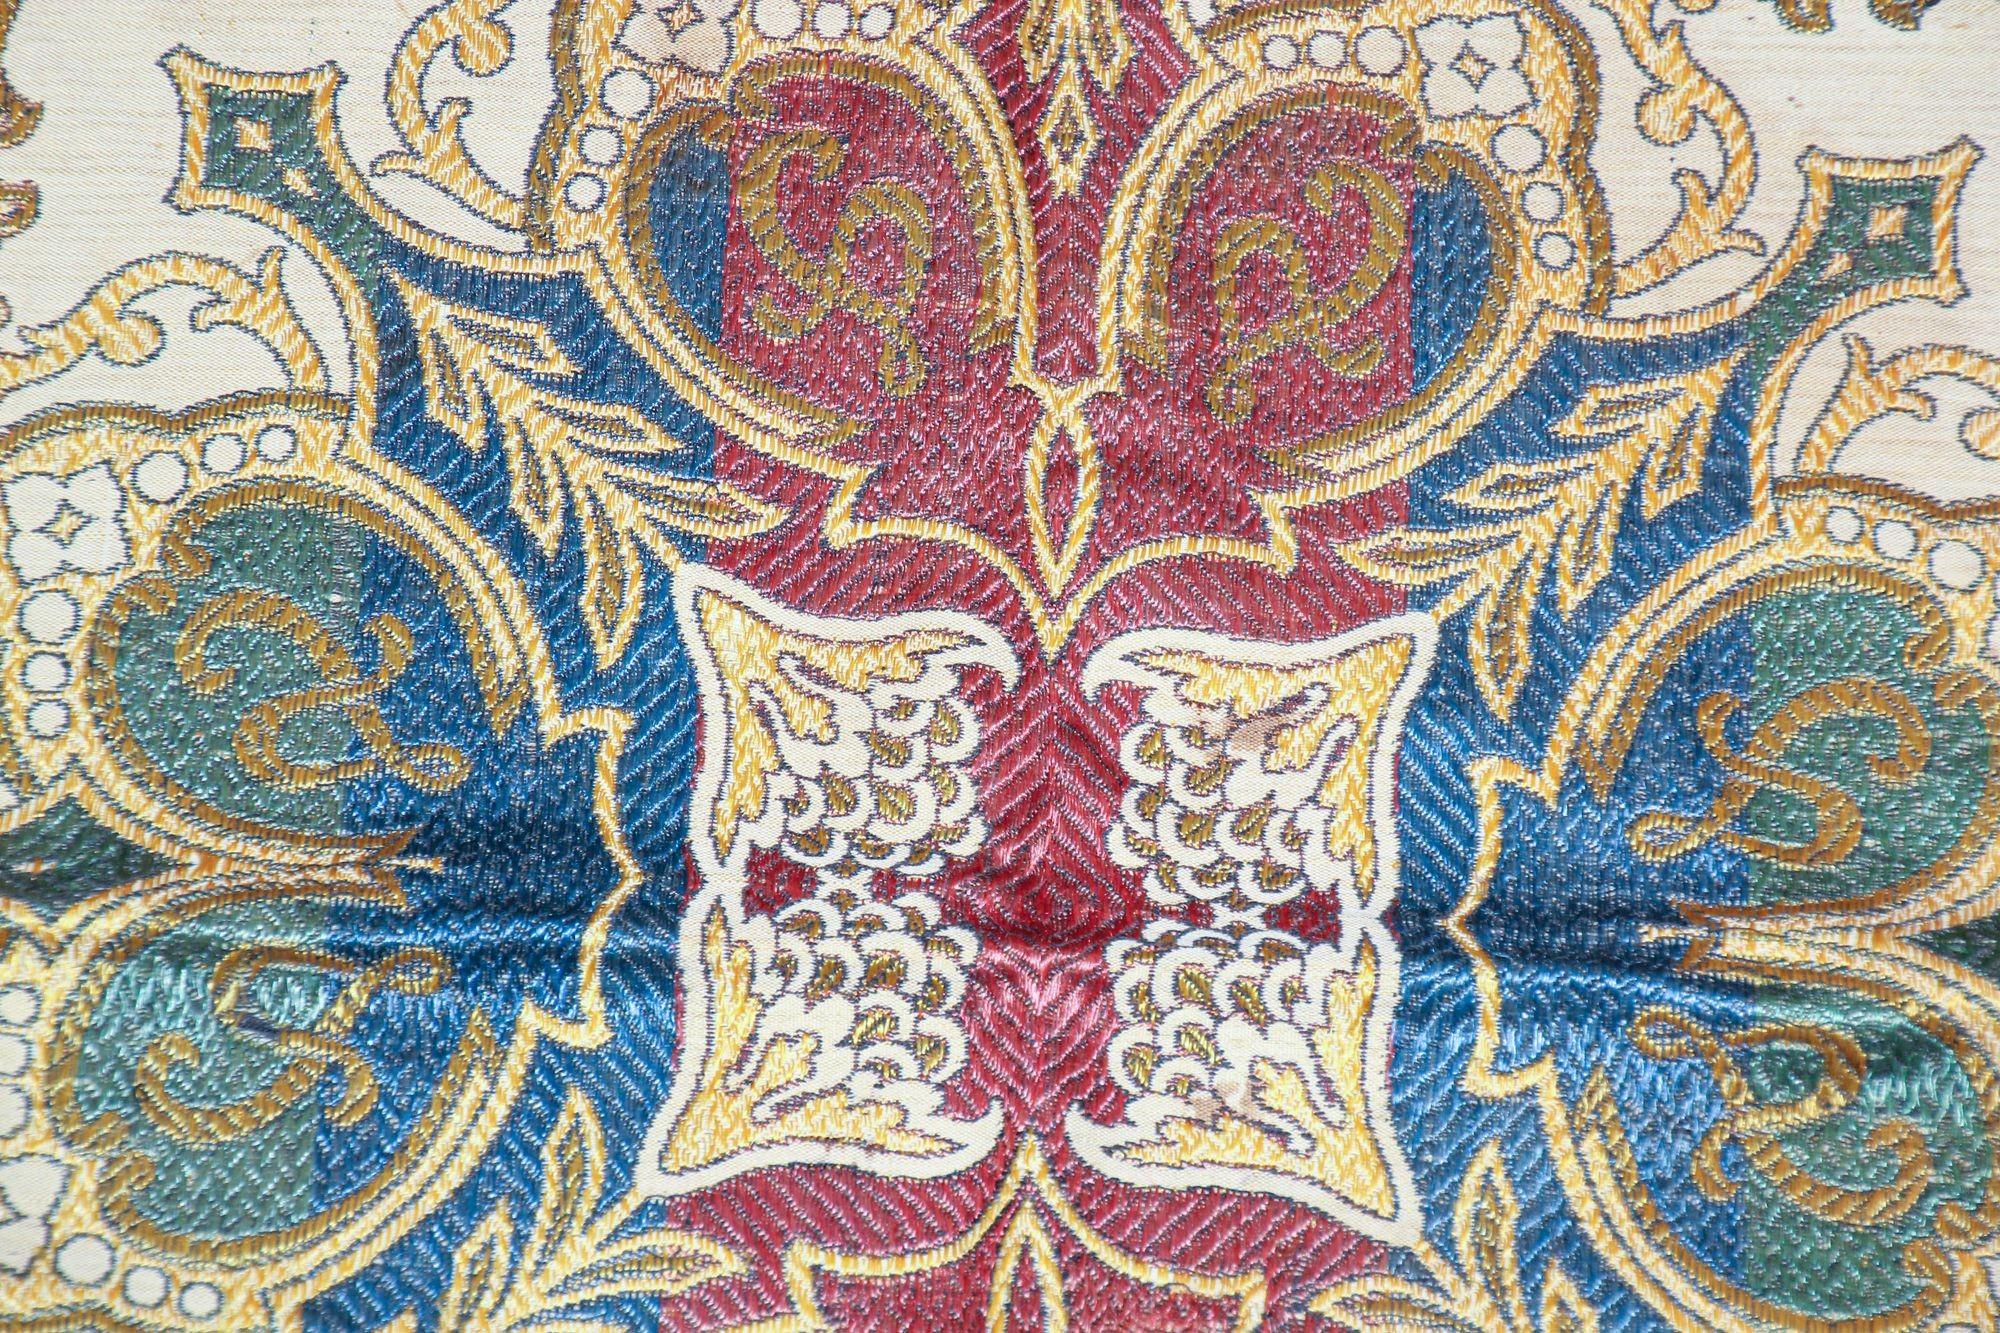 Woven Antique Islamic Textile with Moorish Arabic Writing Granada Spain